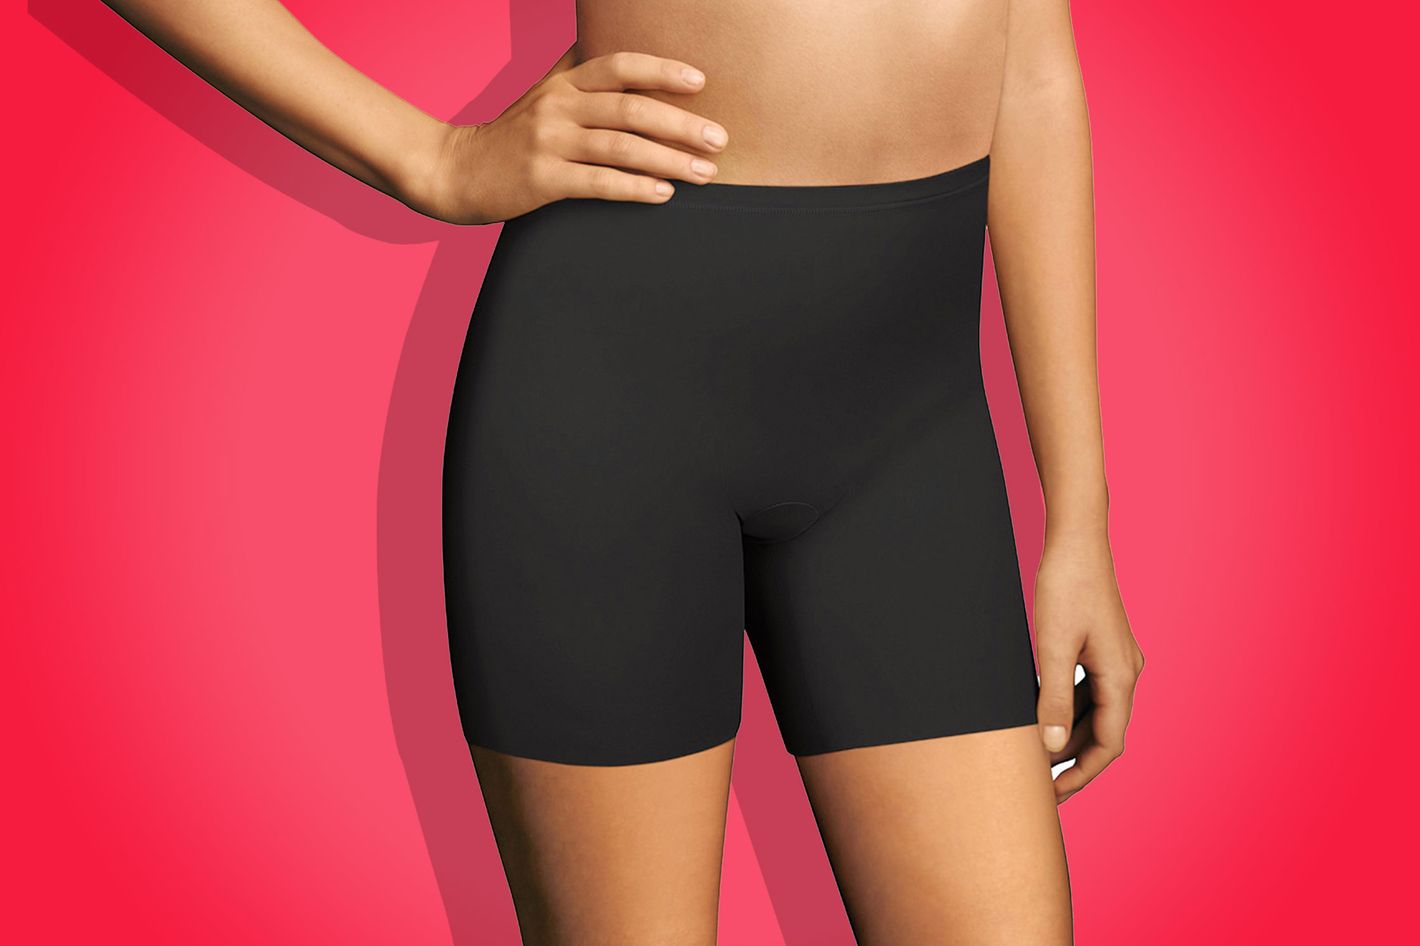 Women Safety Shorts Seamless Invisible Crotch Underwear Brief Stretchy Bodyshort